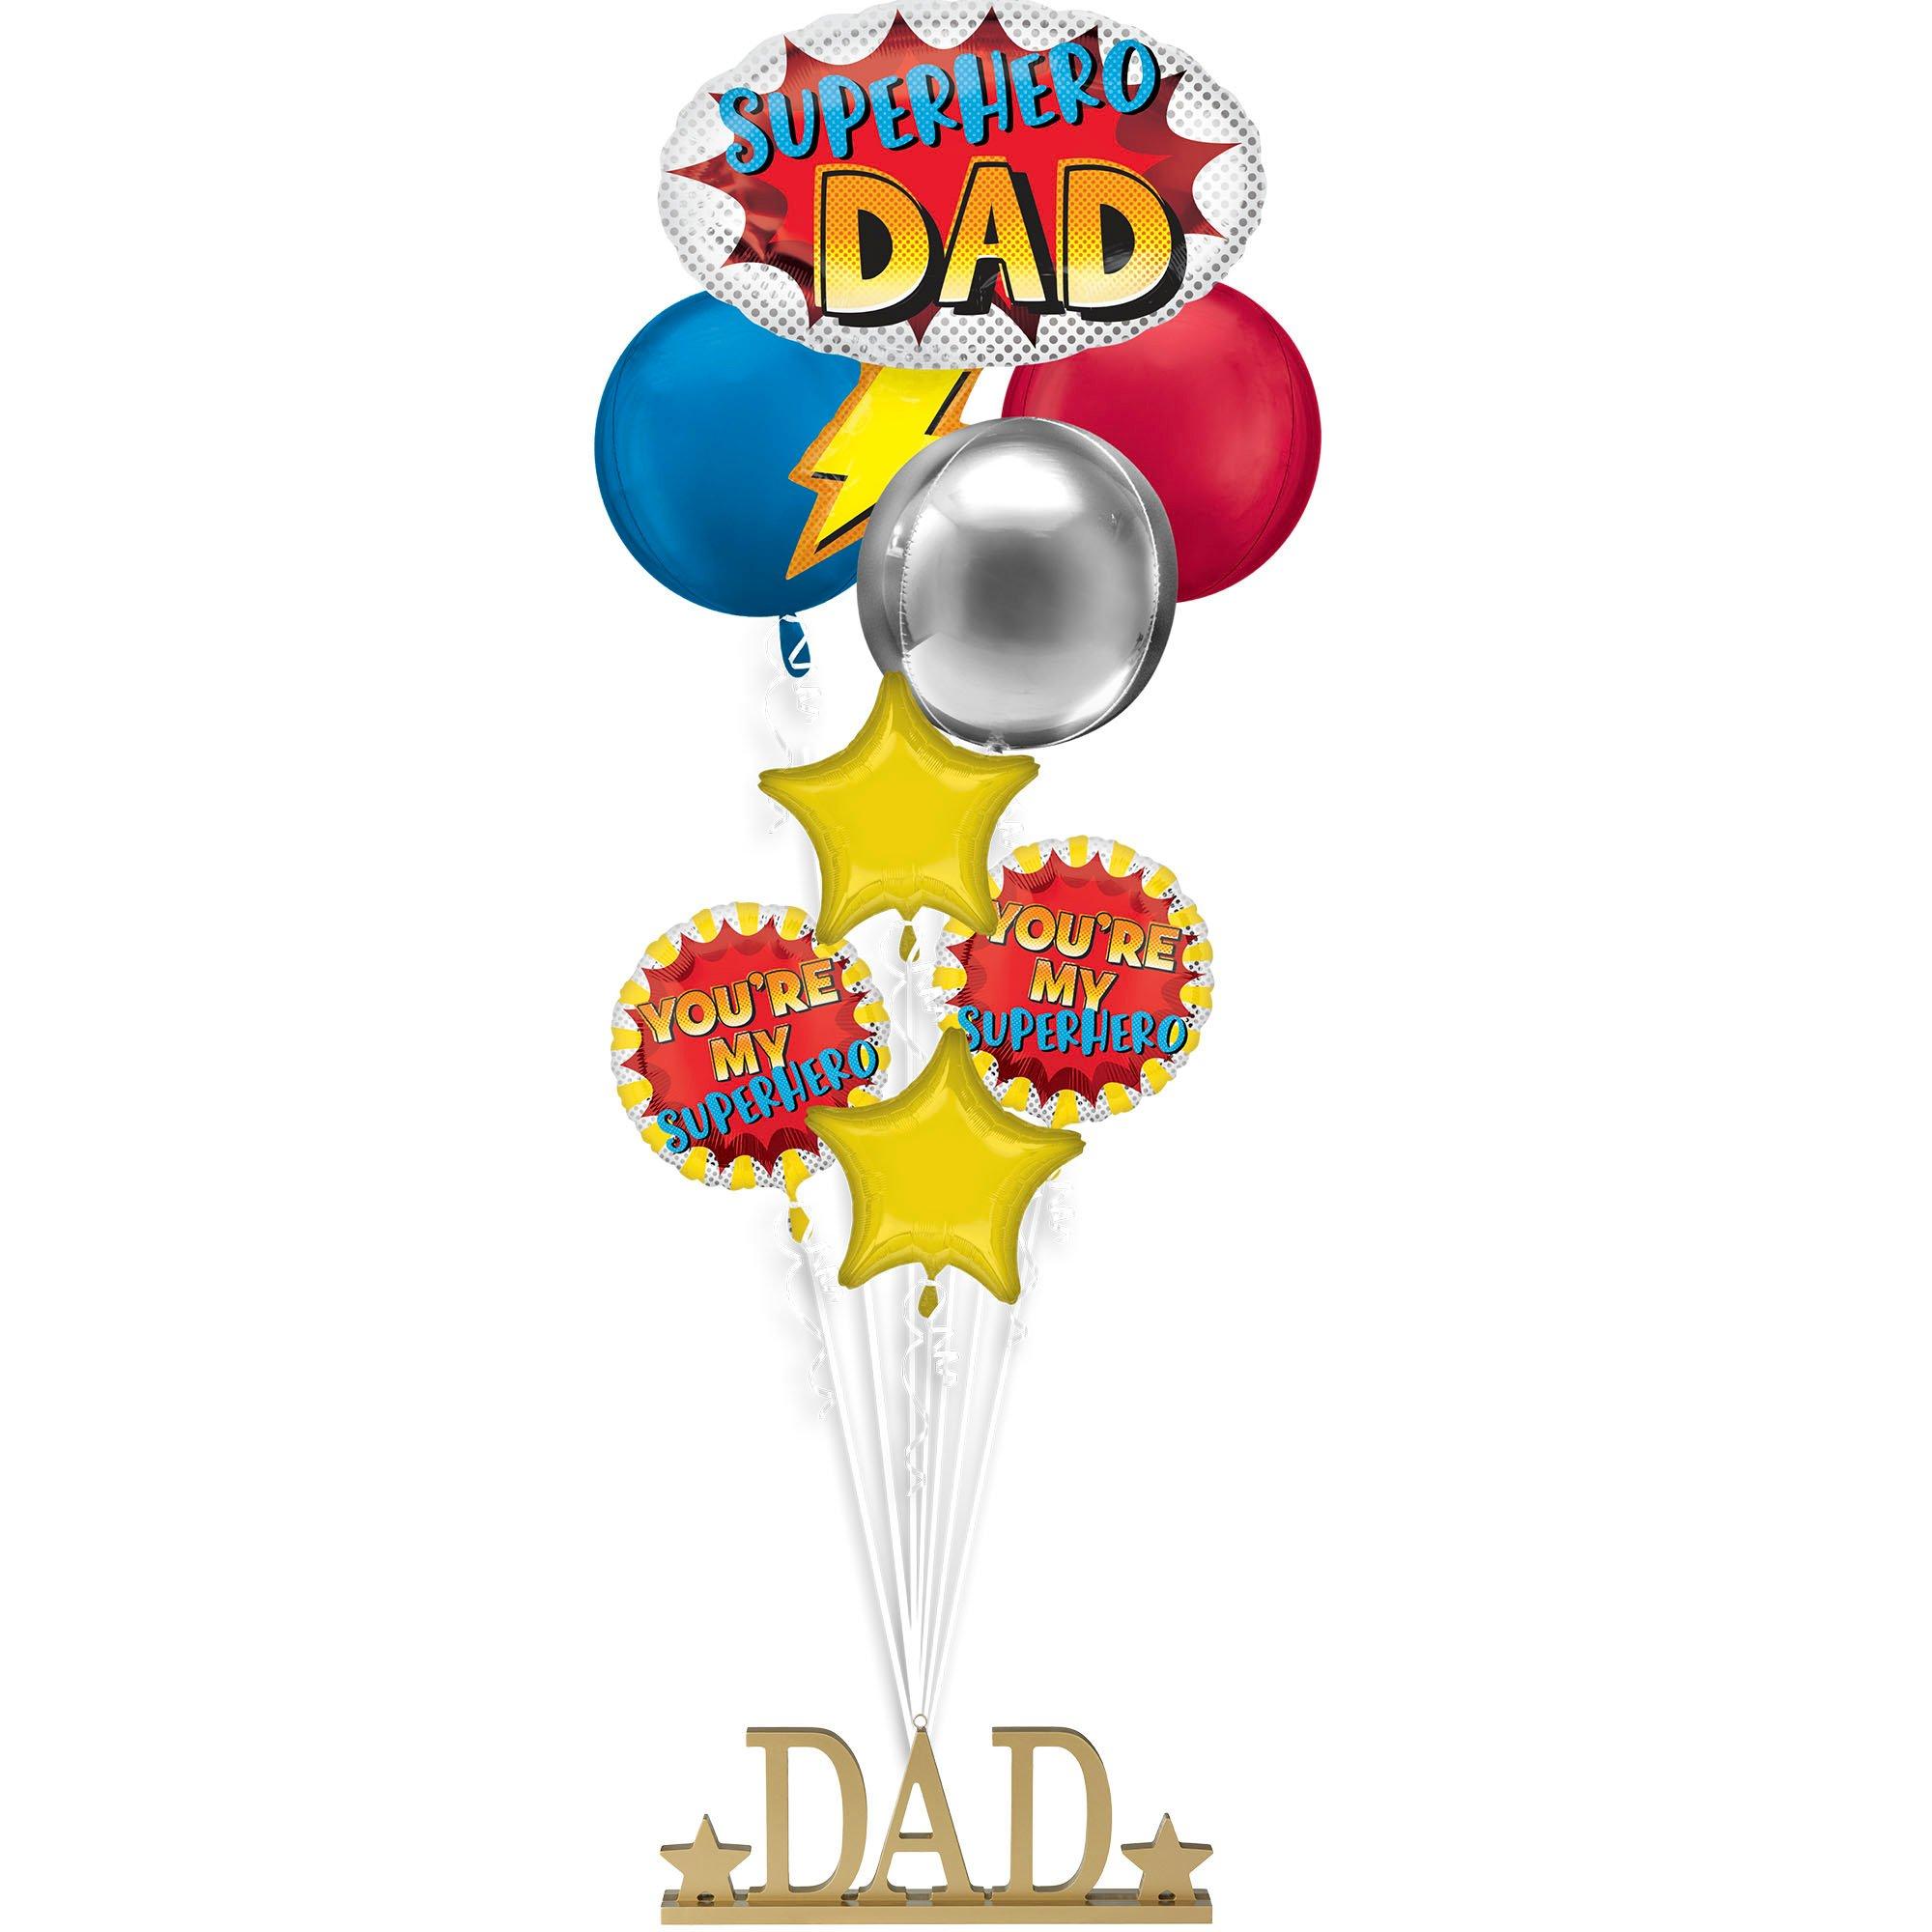 Superhero Dad Premium Balloon Bouquet with Gold Dad Balloon Weight, 9pc